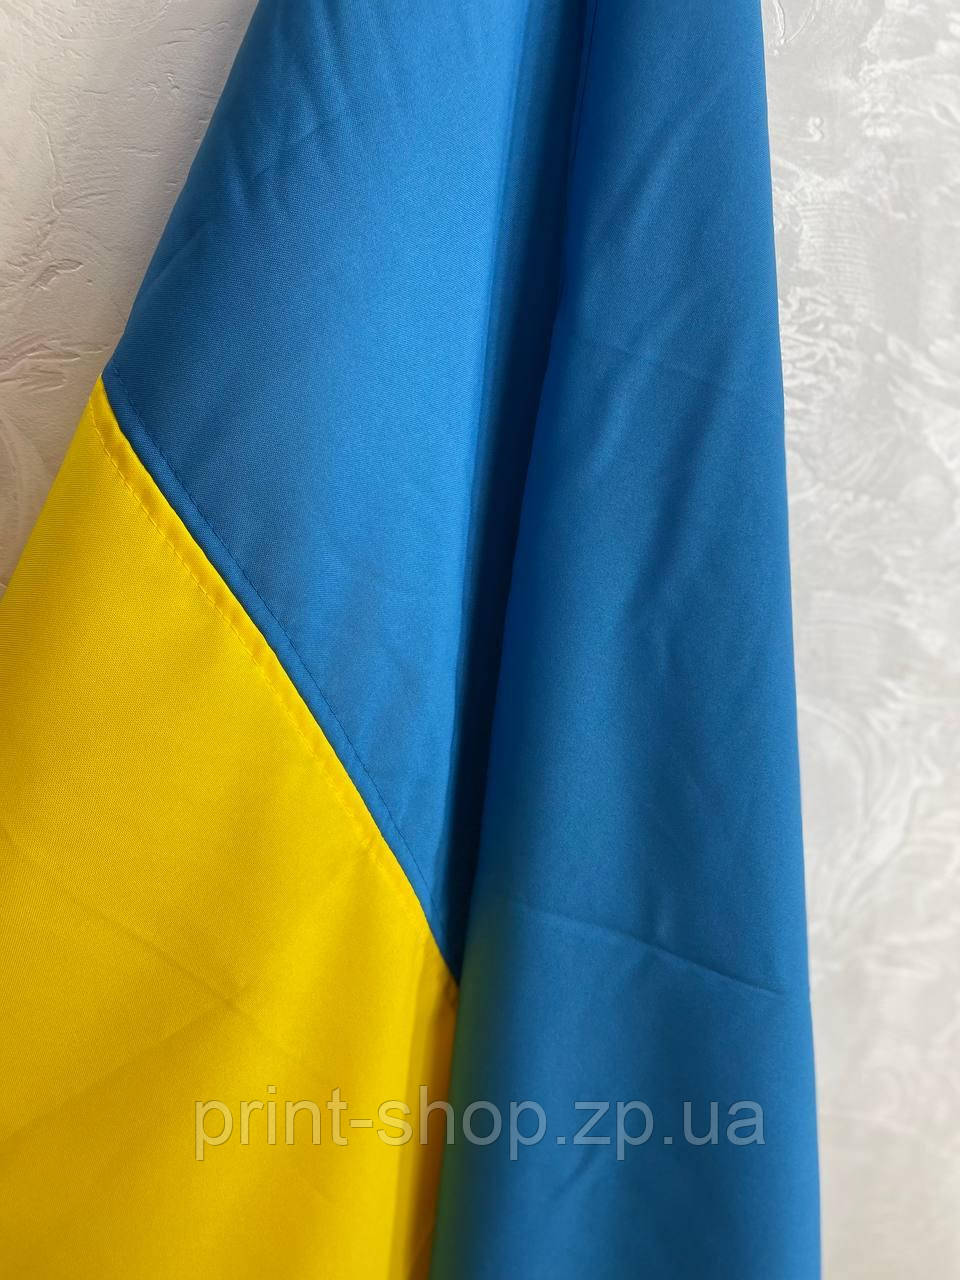 Прапар України великий 135х86 см Блакитно-жовтий